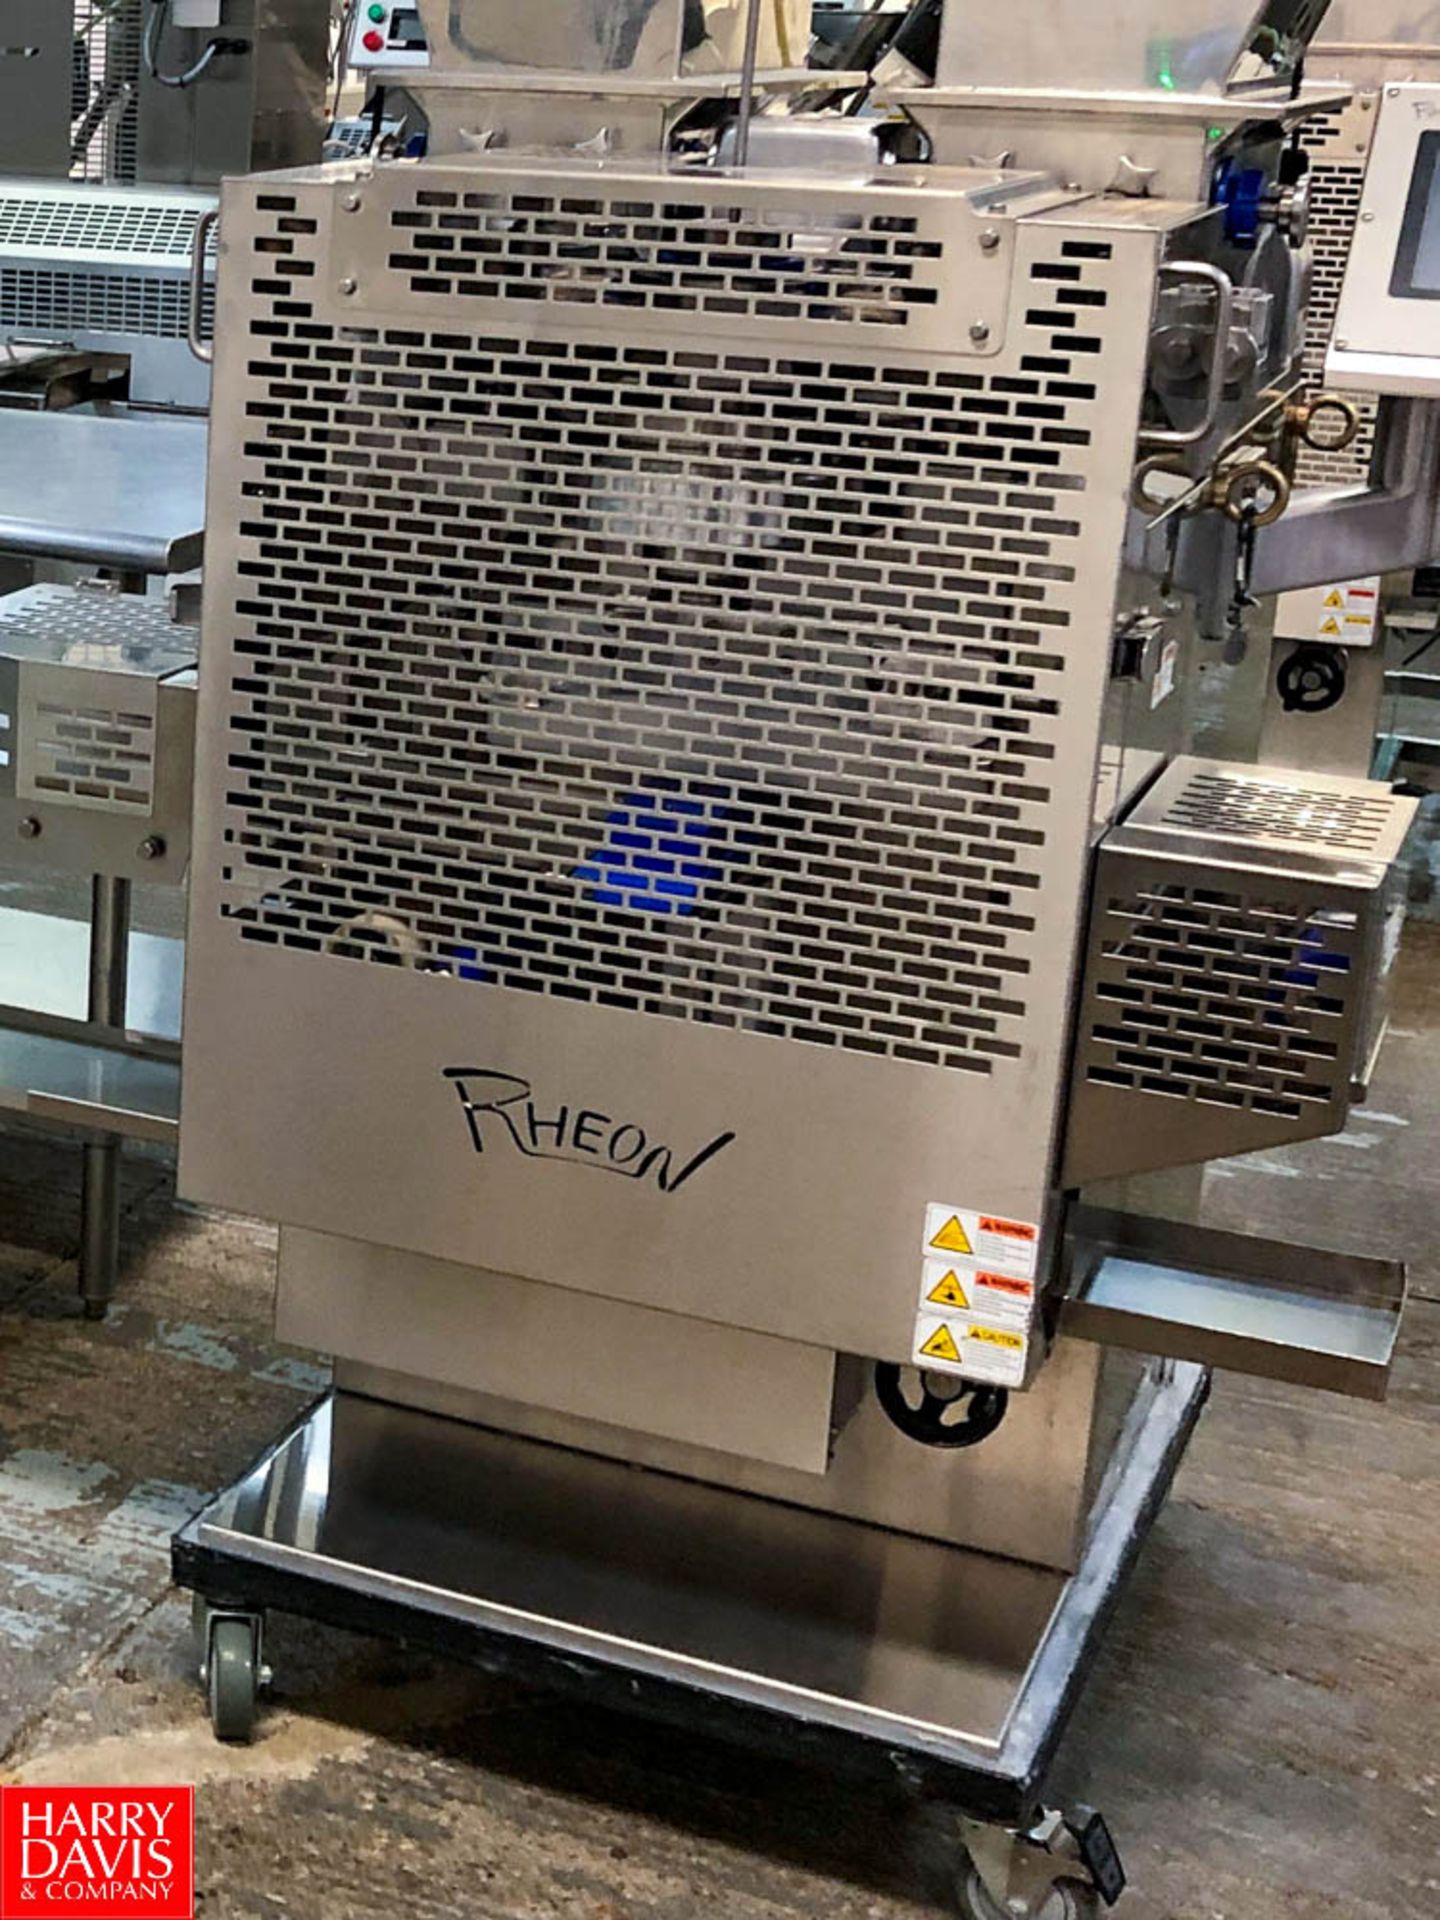 2019 Rheon Cornucopia KN551 All S/S Encrusting Machine, With Iris Cutter, 100 pcs/min,